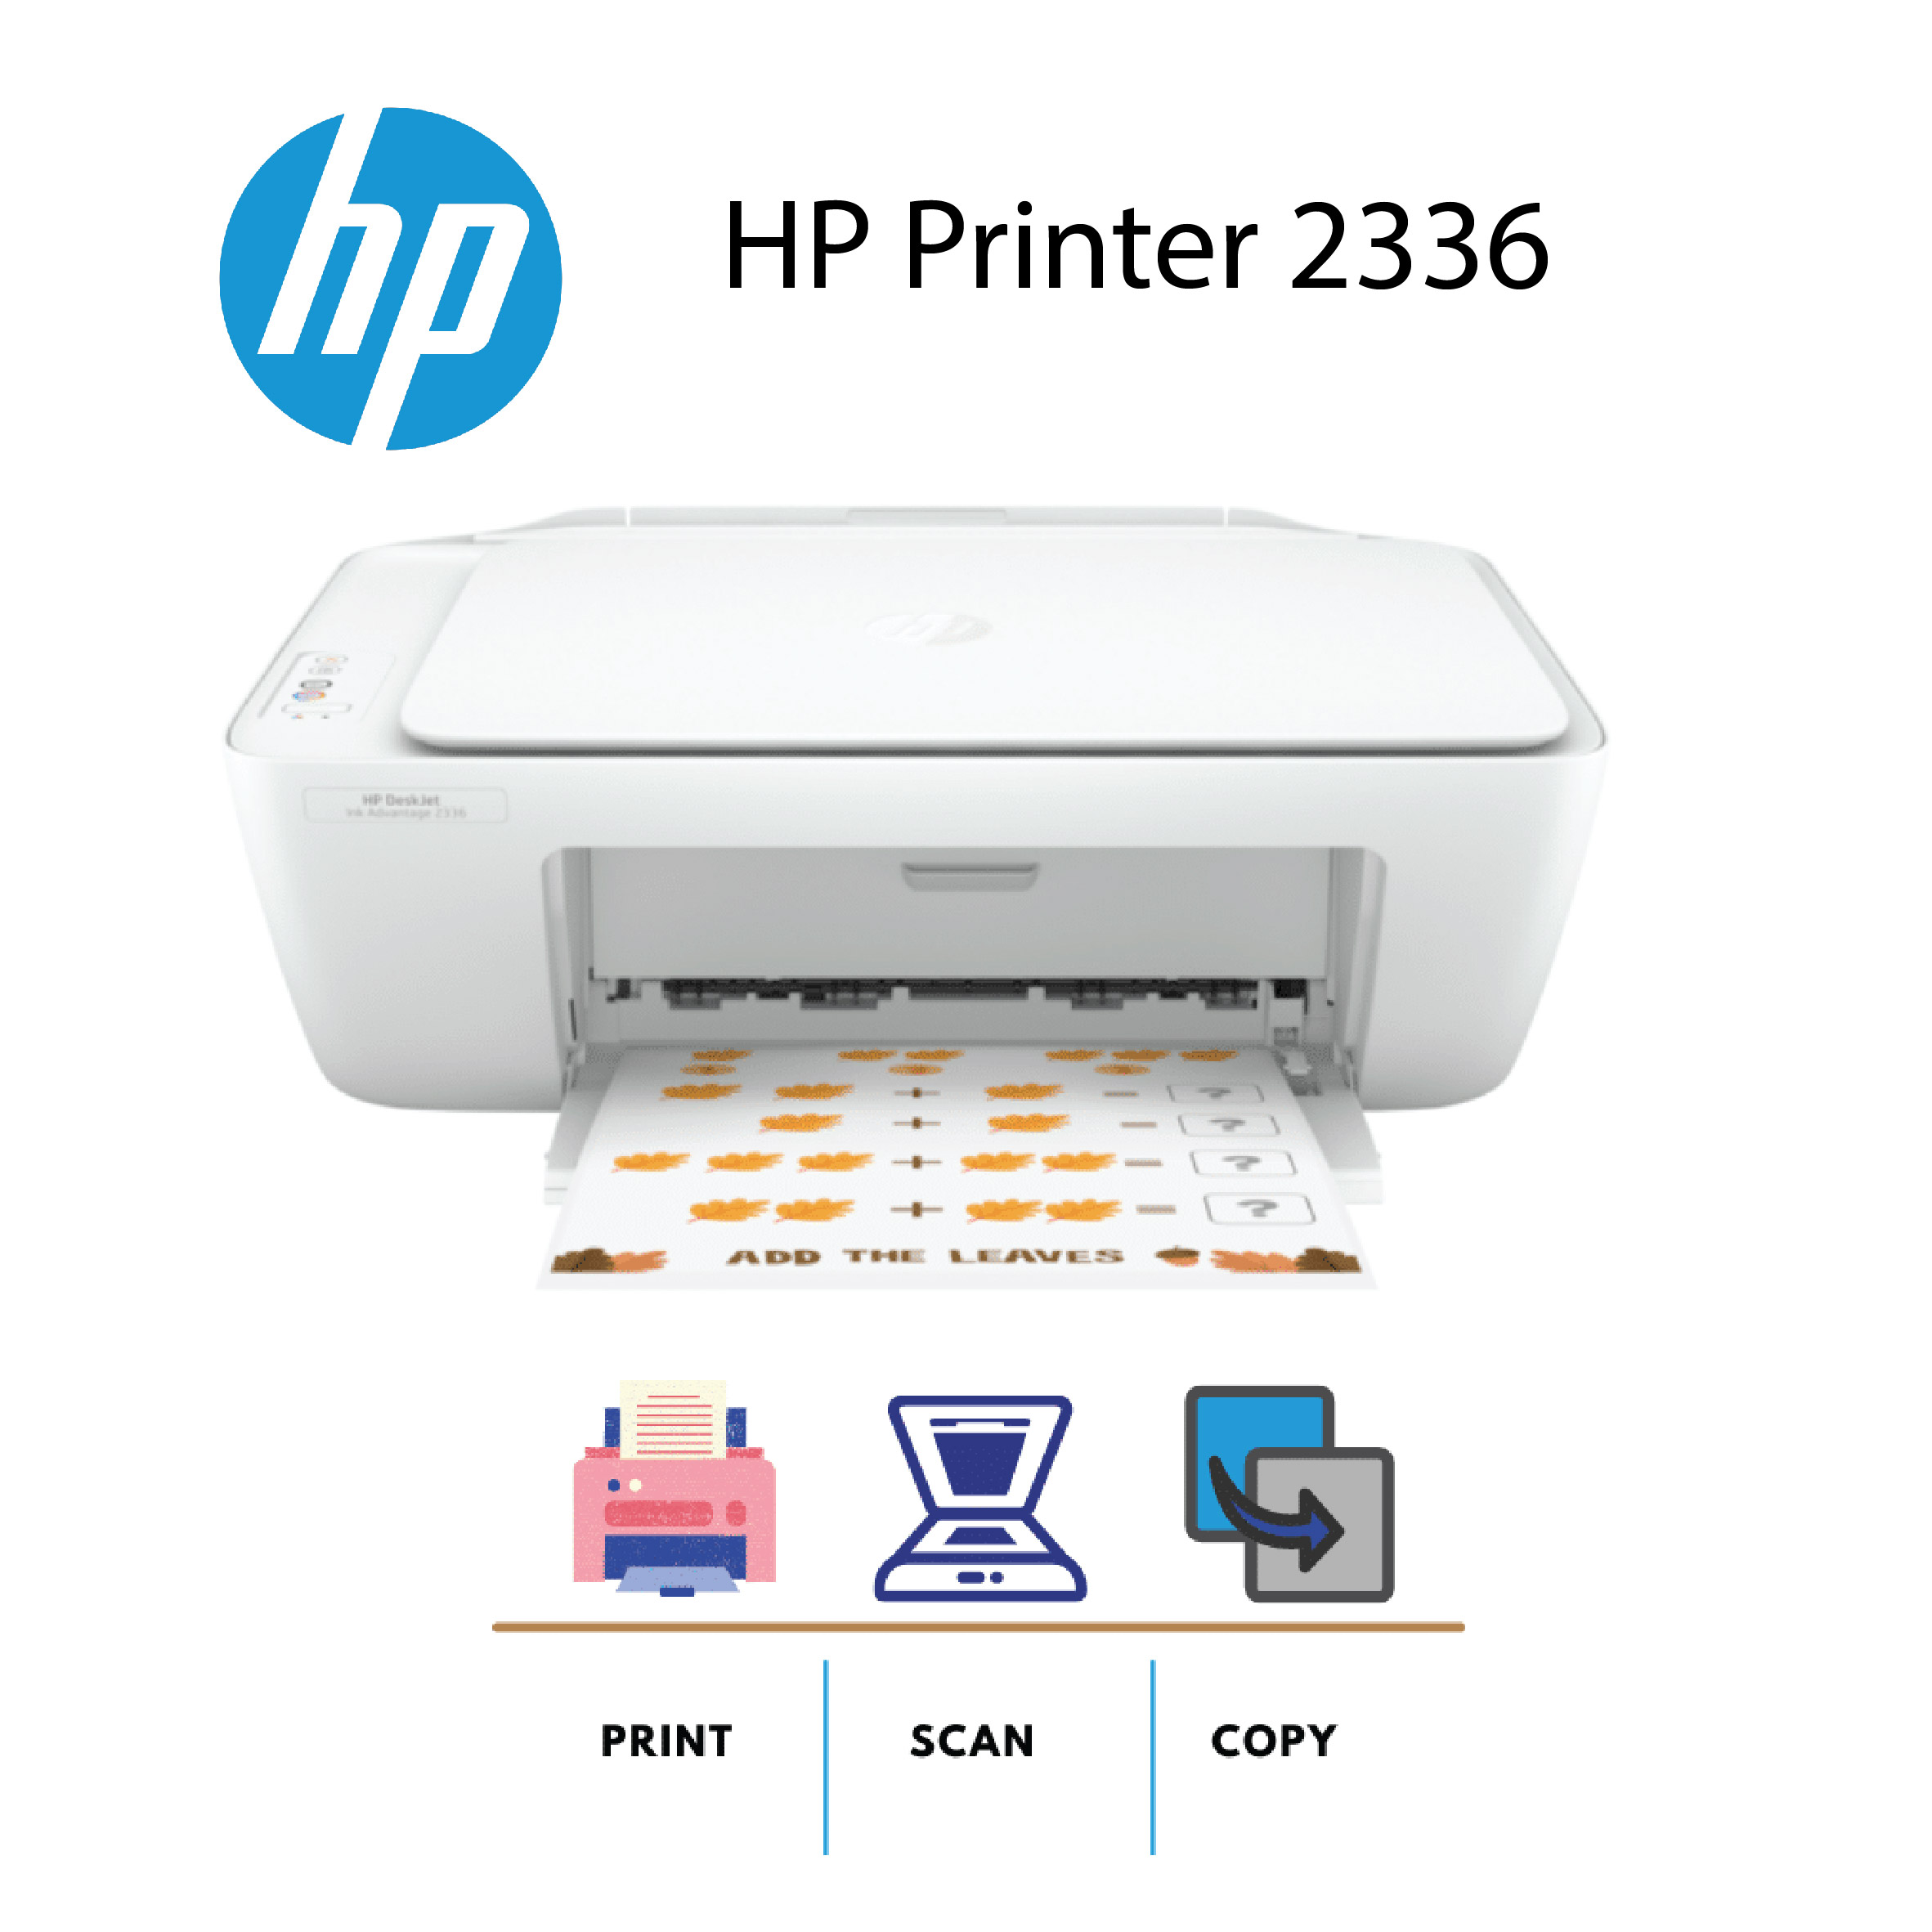 HP Printer 2336 Deskjet Ink Advantage Home Use All In One Printer